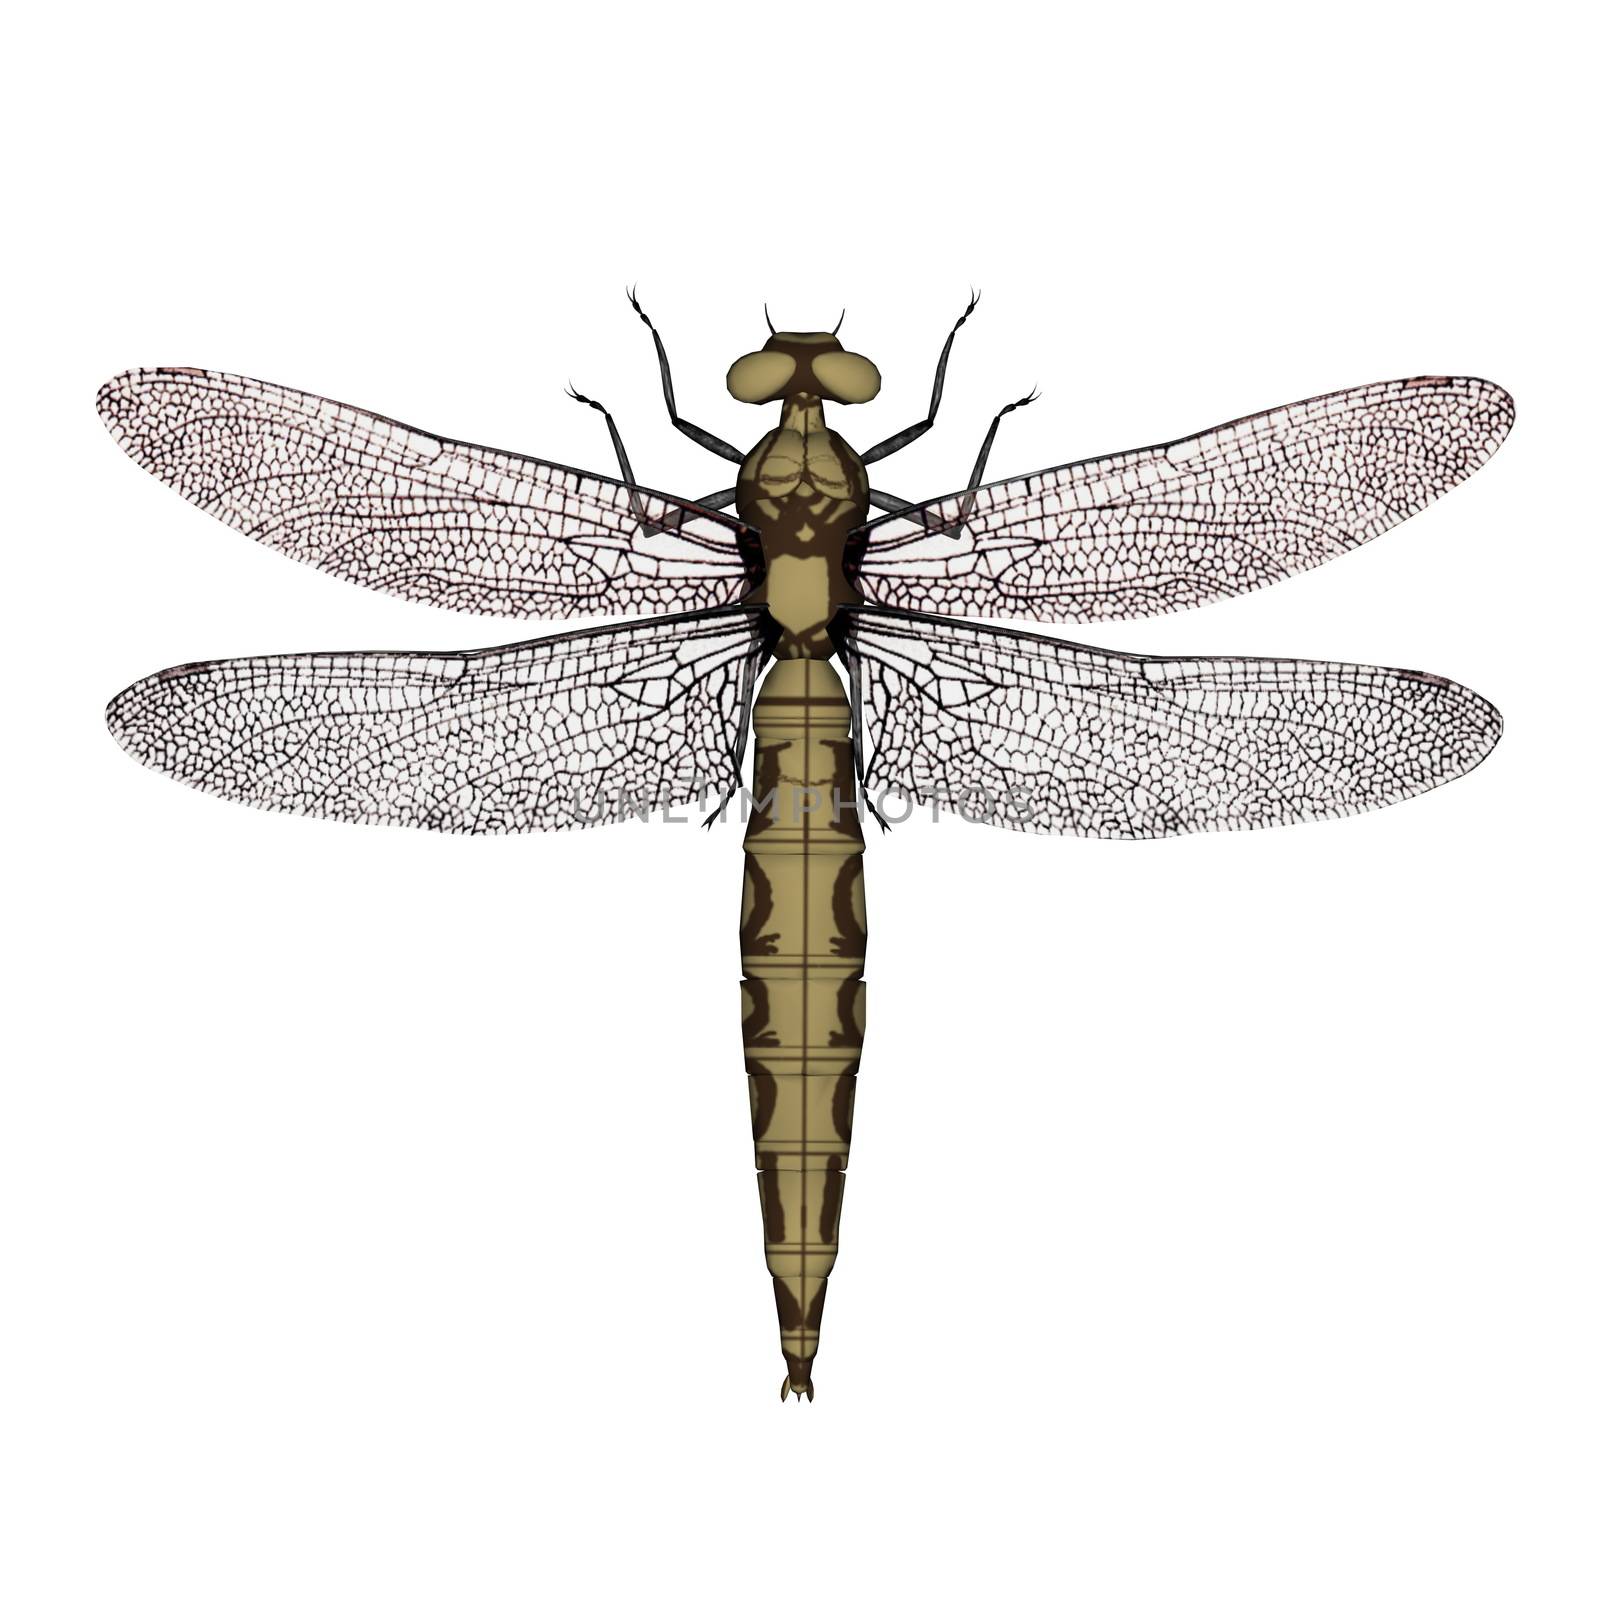 Orthetrum dragonfly female - 3D render by Elenaphotos21